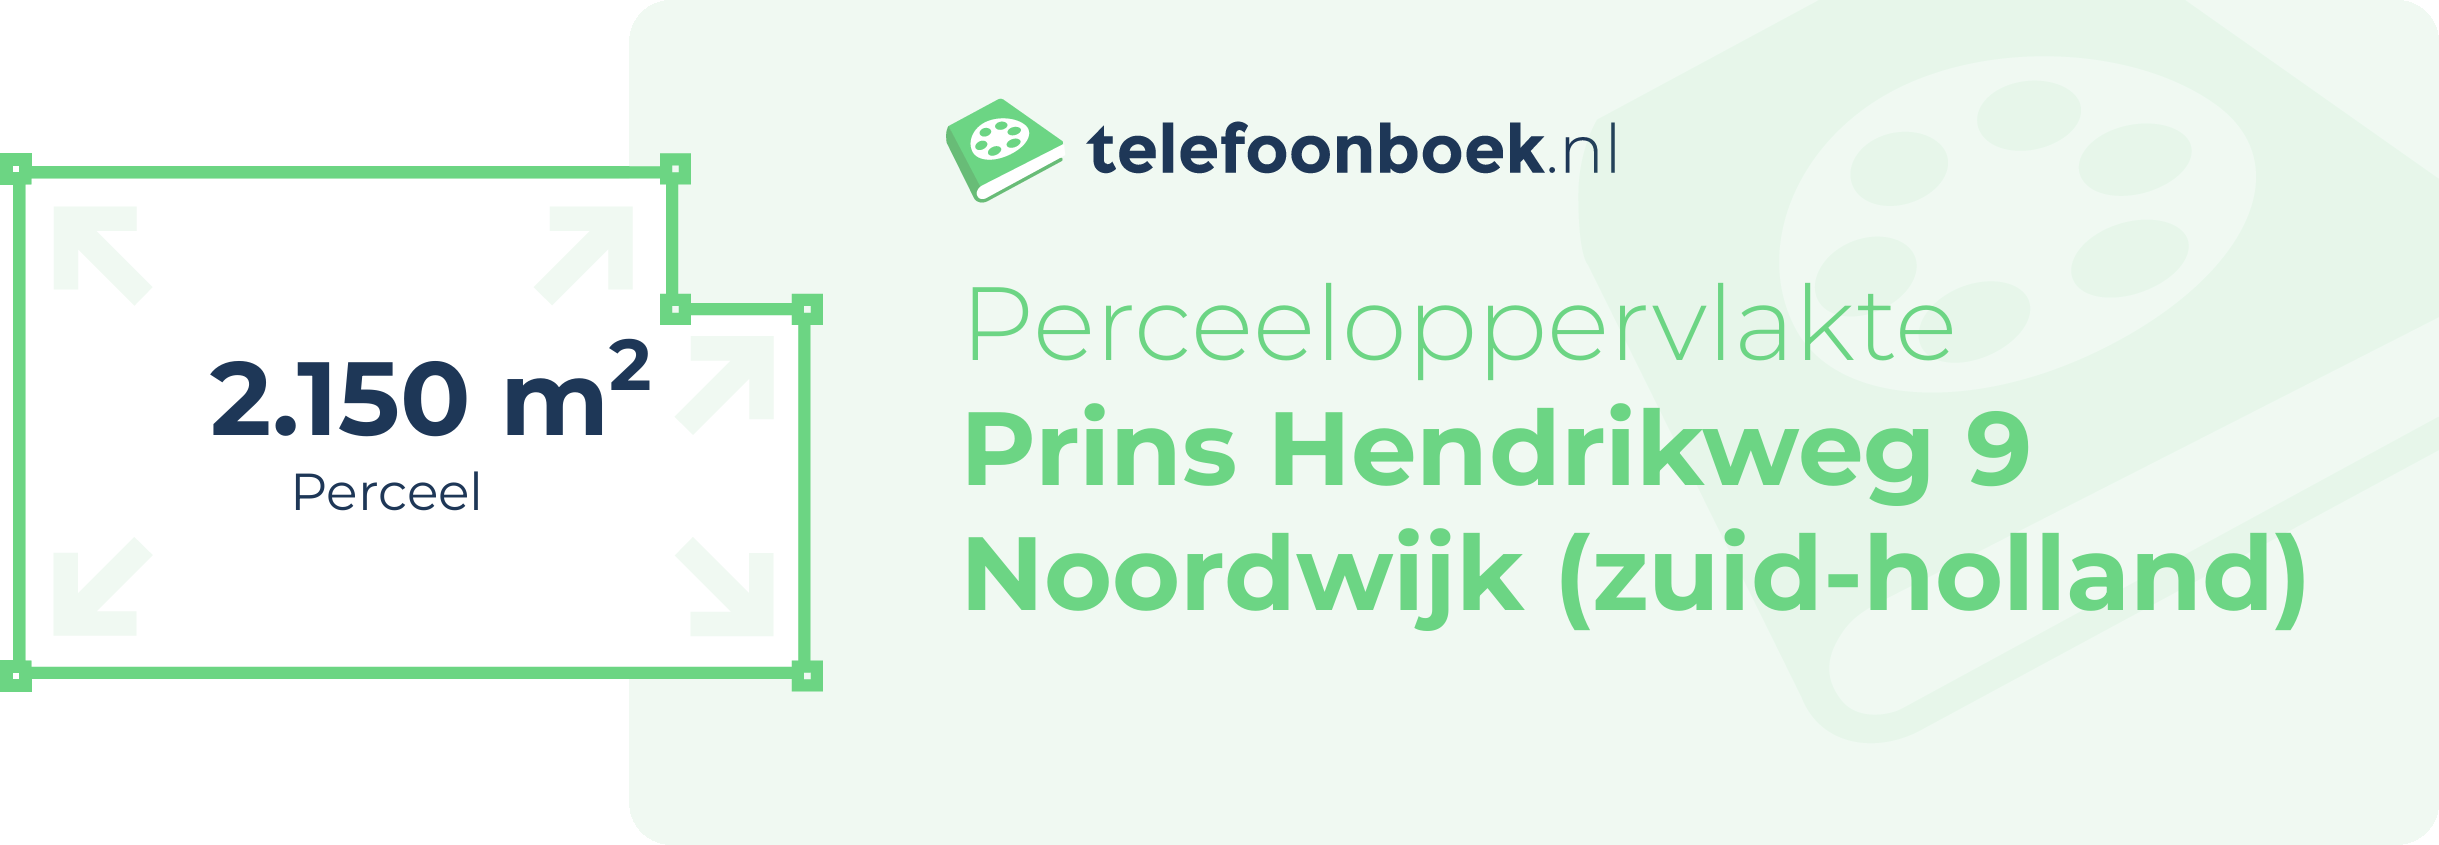 Perceeloppervlakte Prins Hendrikweg 9 Noordwijk (Zuid-Holland)